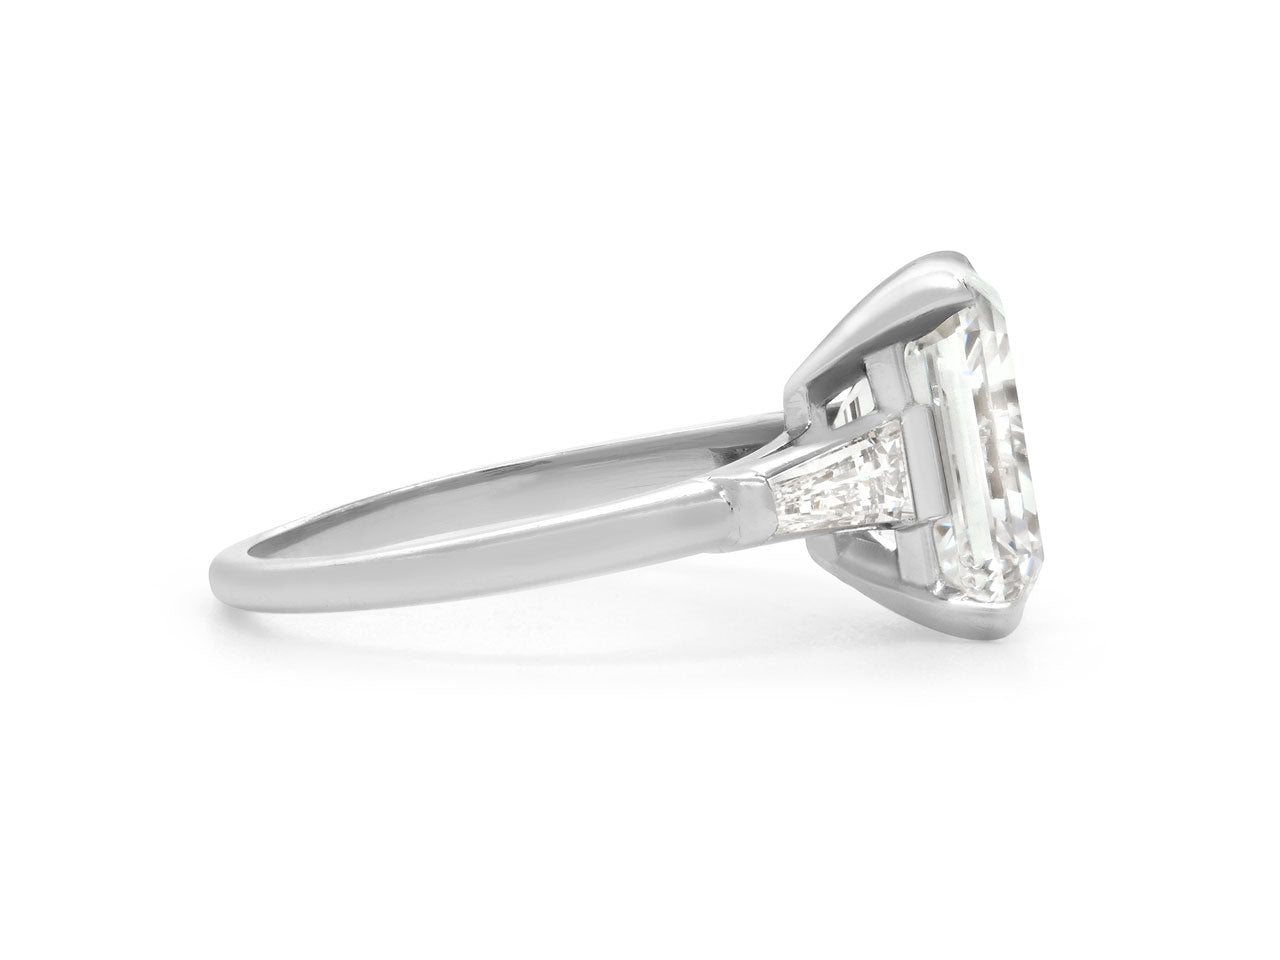 Emerald Cut Diamond, 4.67 Carats E/VS1, in Platinum